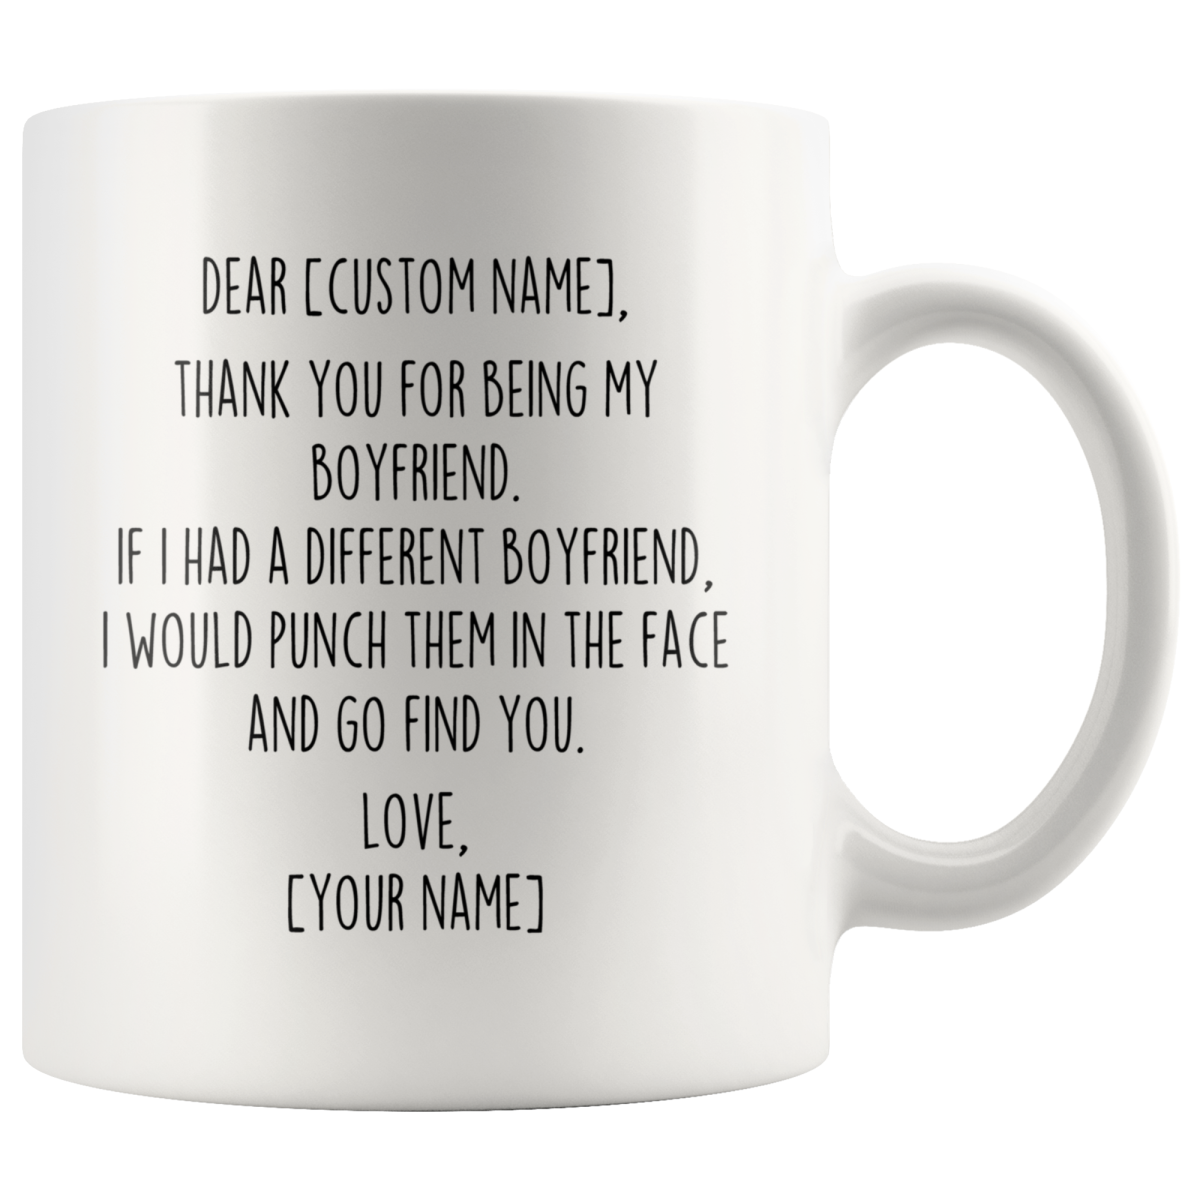  Double Sided Custom Photo Coffee Mug Personalized with